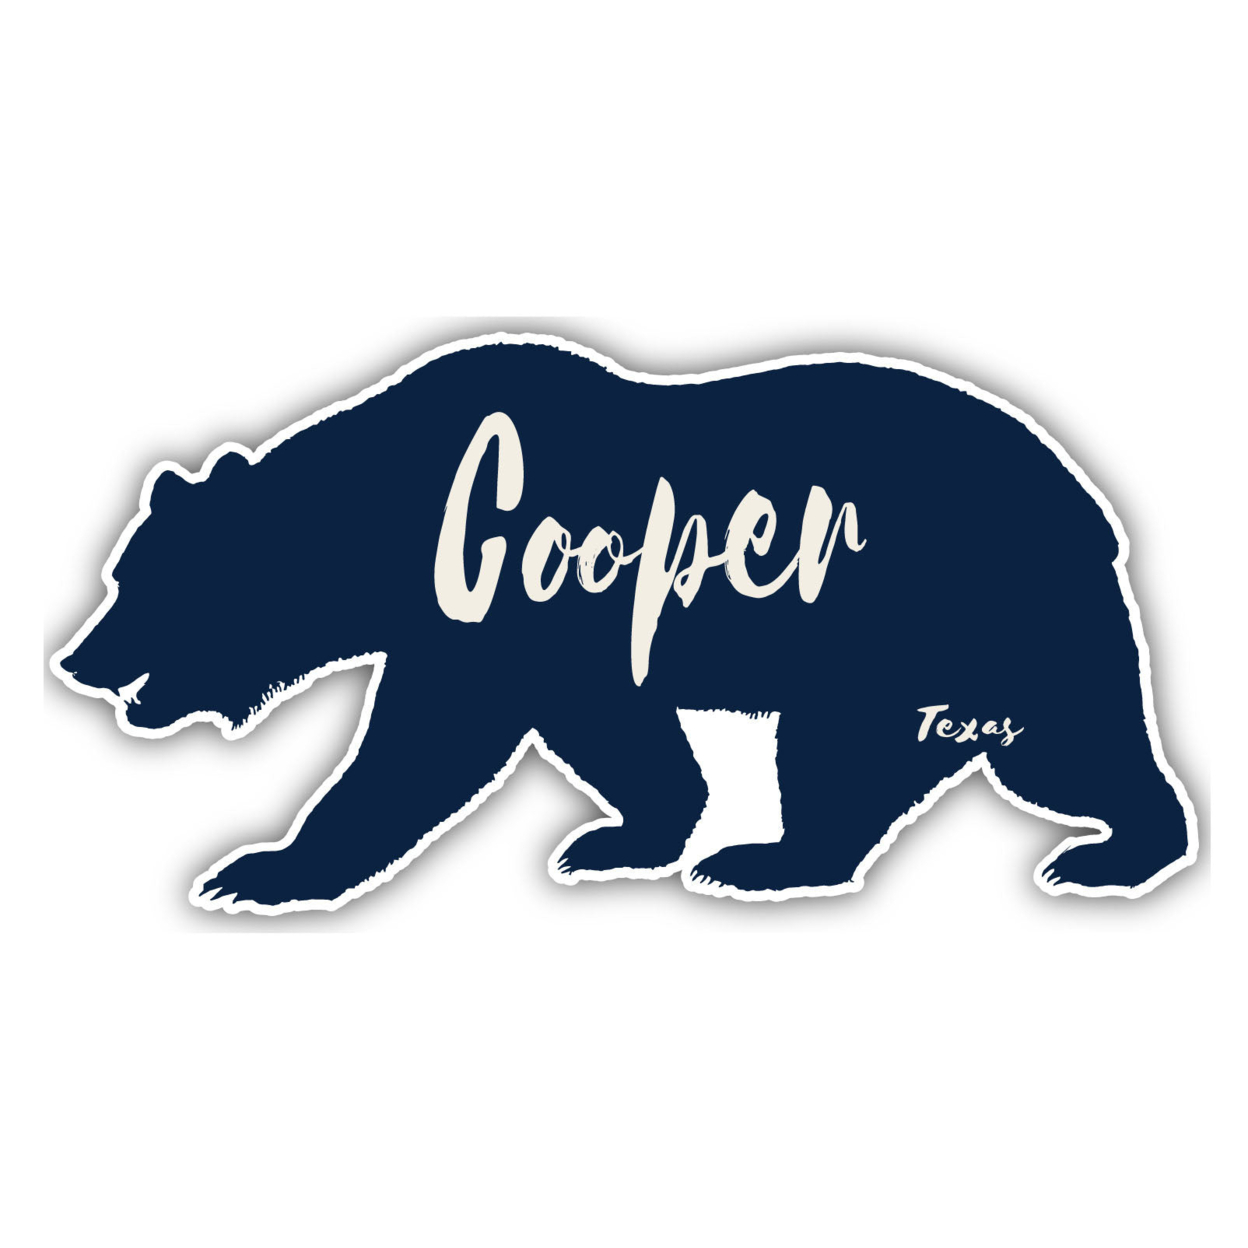 Cooper Texas Souvenir Decorative Stickers (Choose Theme And Size) - Single Unit, 4-Inch, Bear